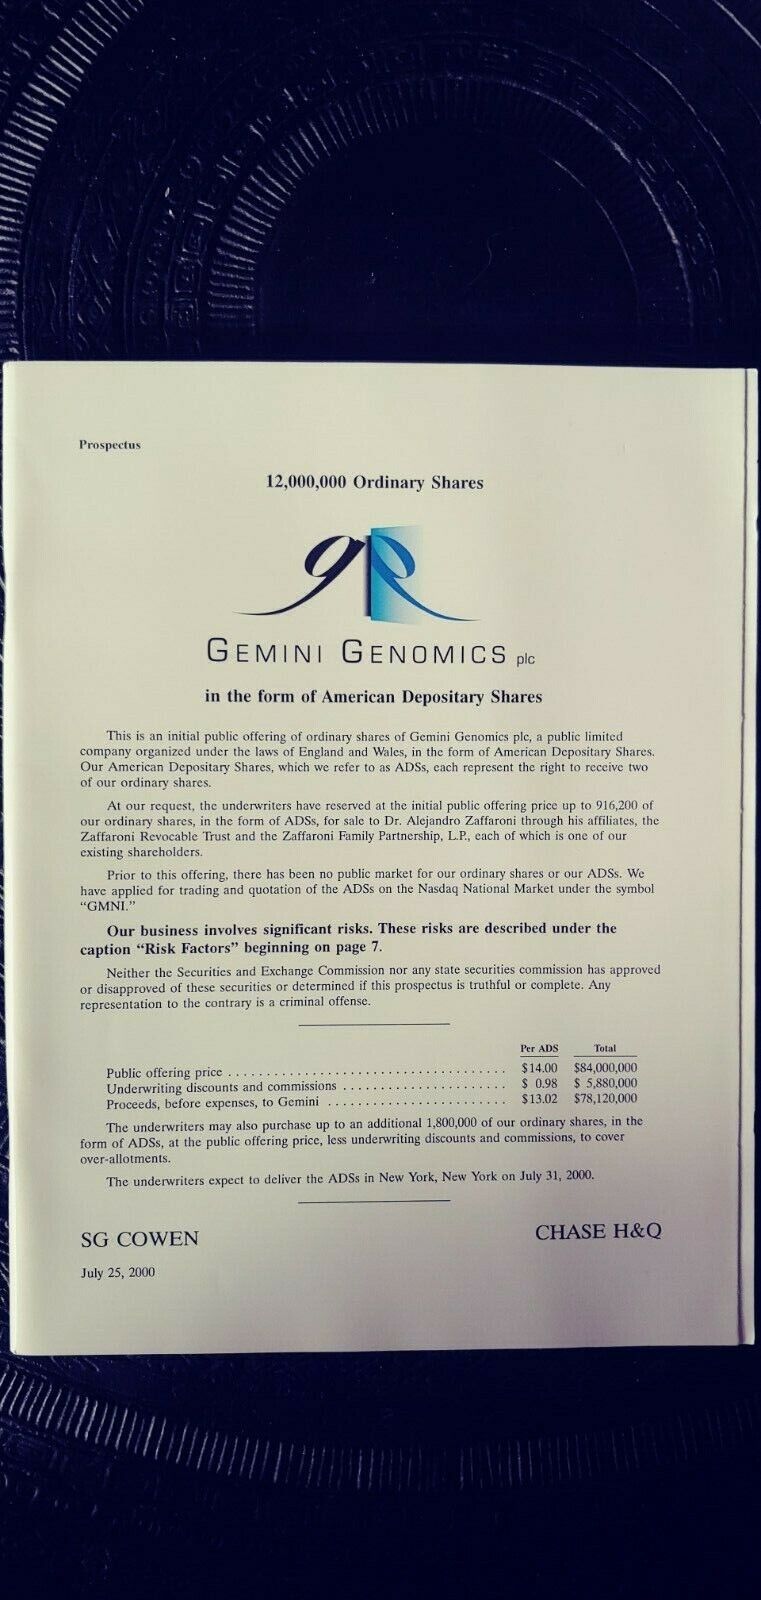 Gemini Genomics Plc IPO stock prospectus. 2000. Rare dot-com era artifact.